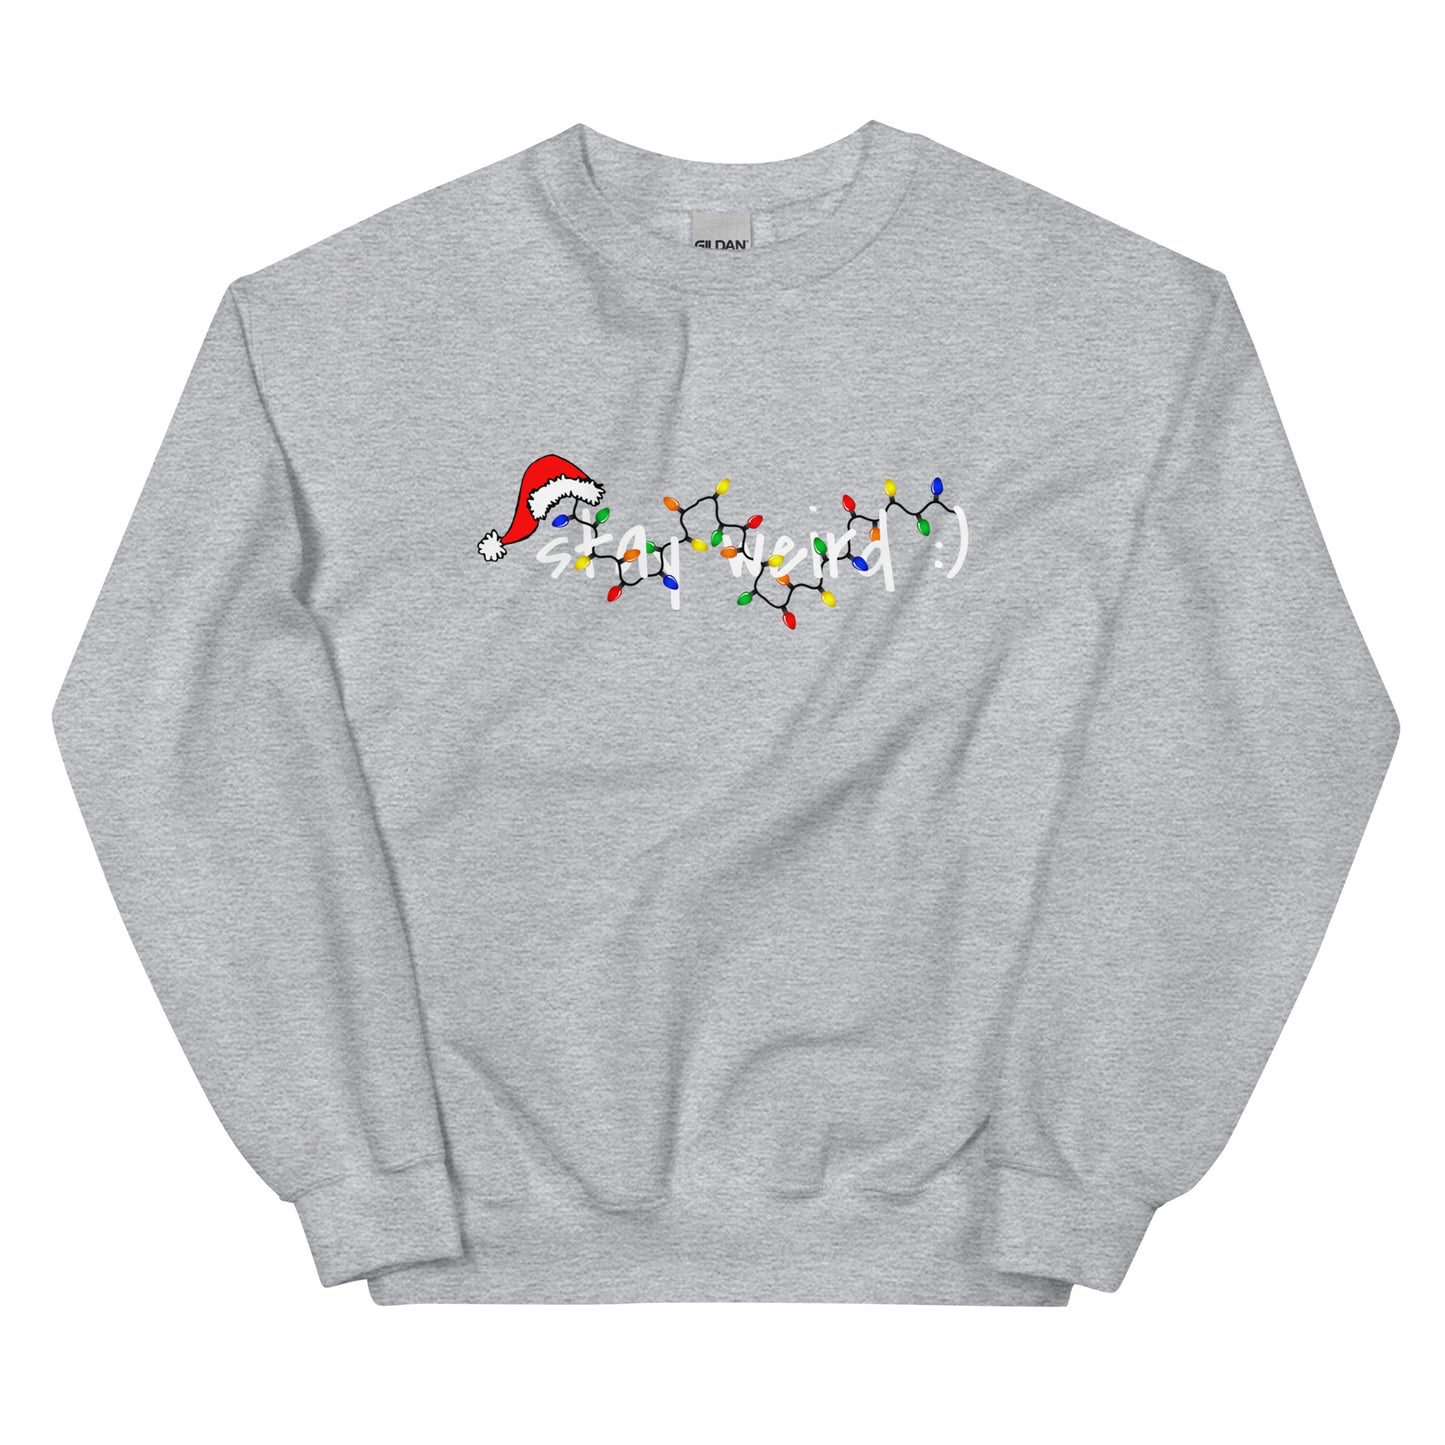 Christmas Lights "Stay weird" Sweatshirt